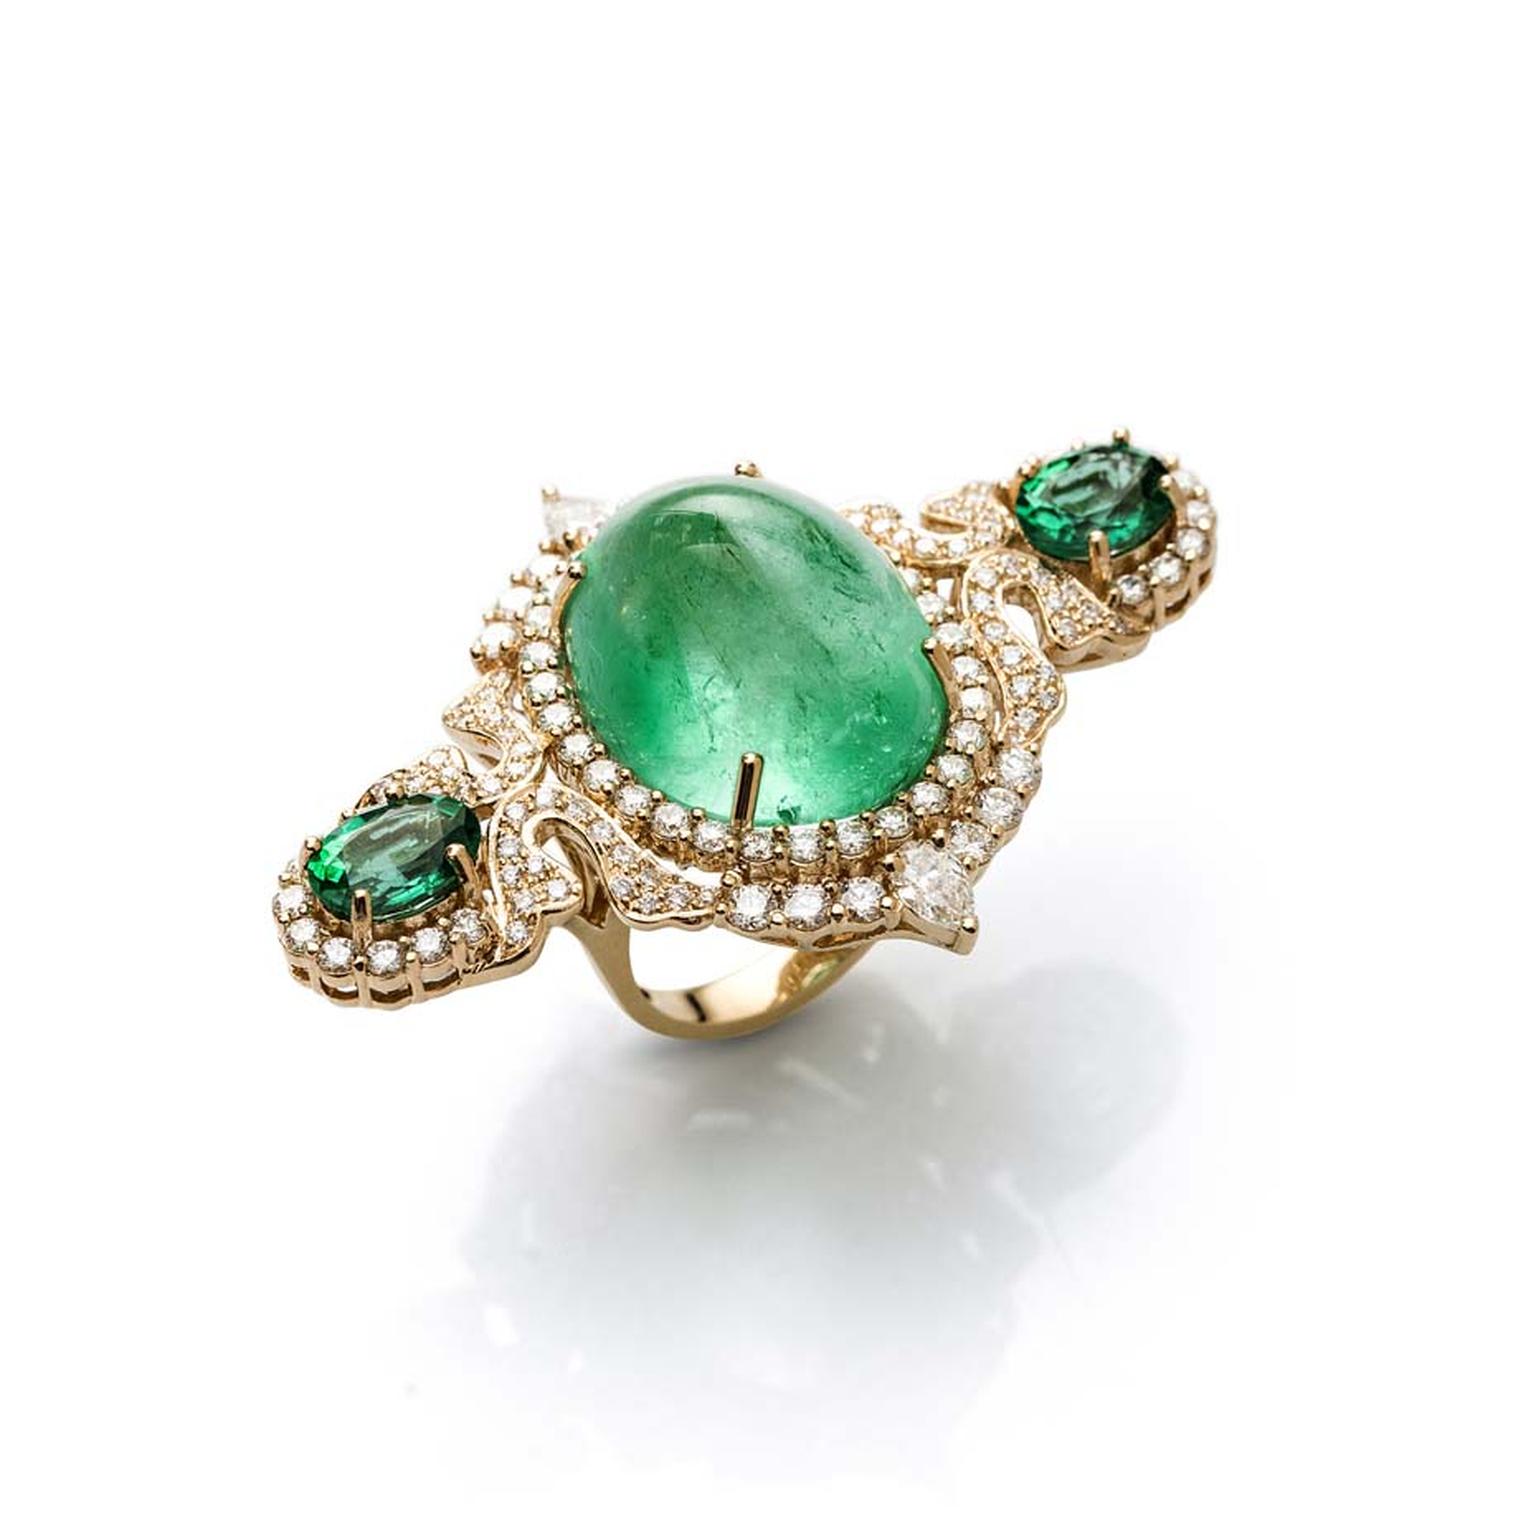 Fahra Khan_Le Jardin Exotique_Royal 30.42ct Columbian emerald three-finger Farah Khan ring in 18ct yellow gold.jpg